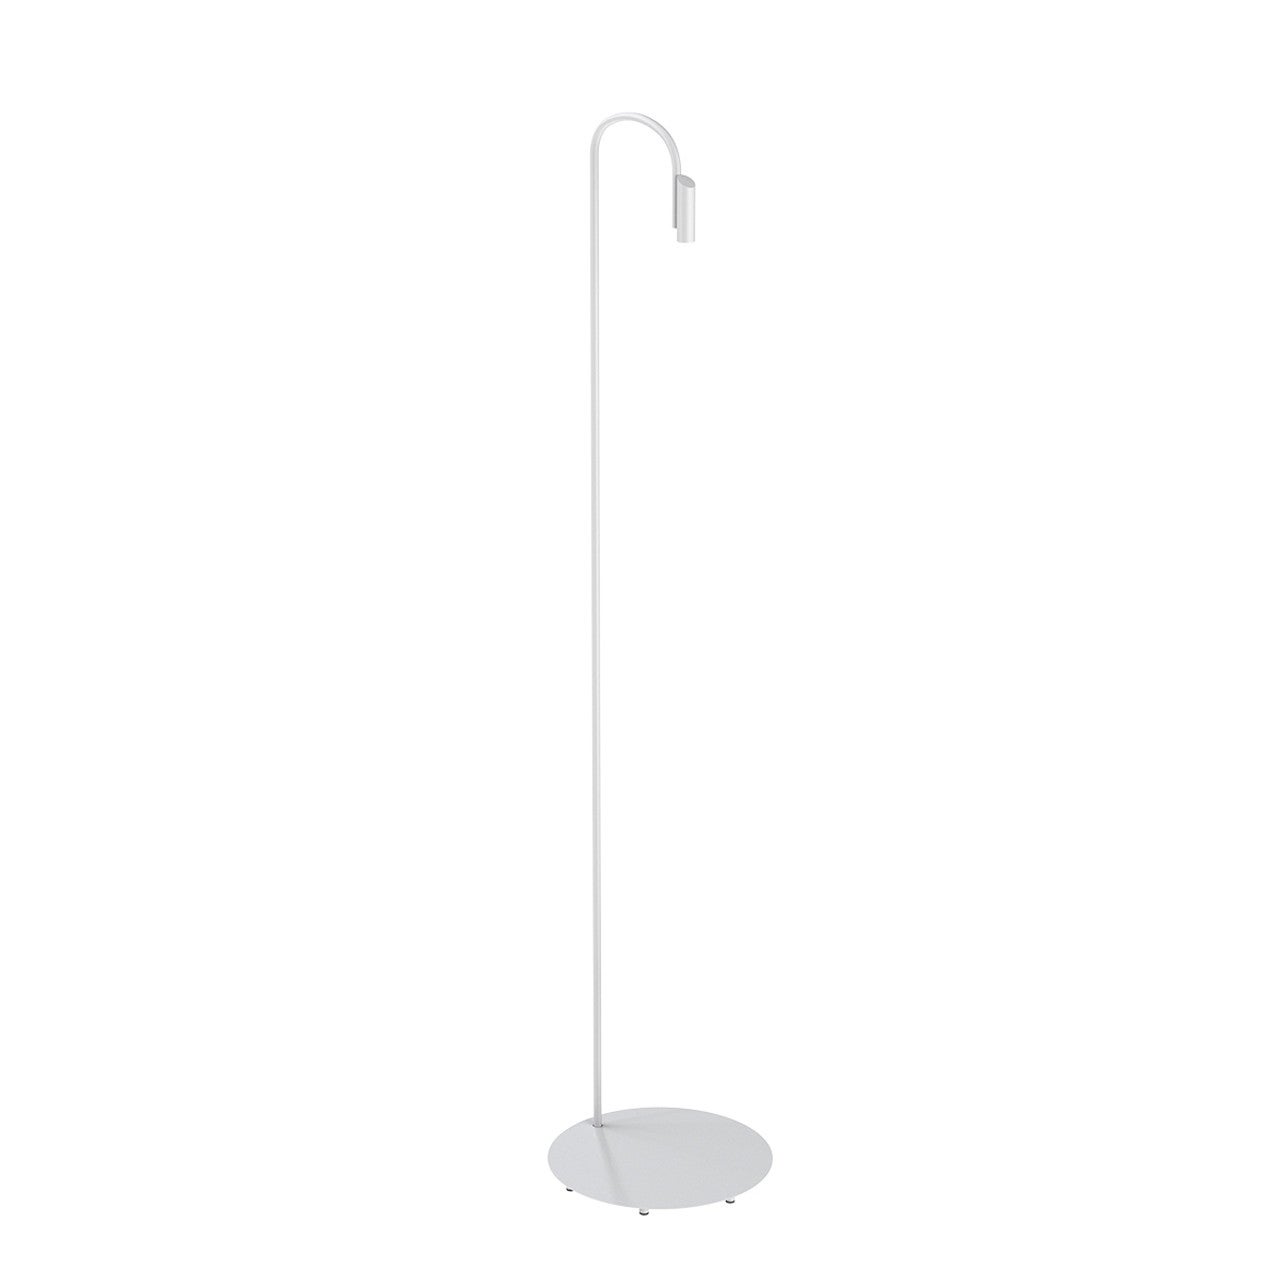 Flos Caule 2700K Model 5 Outdoor Floor Lamp in White with Regular Shade